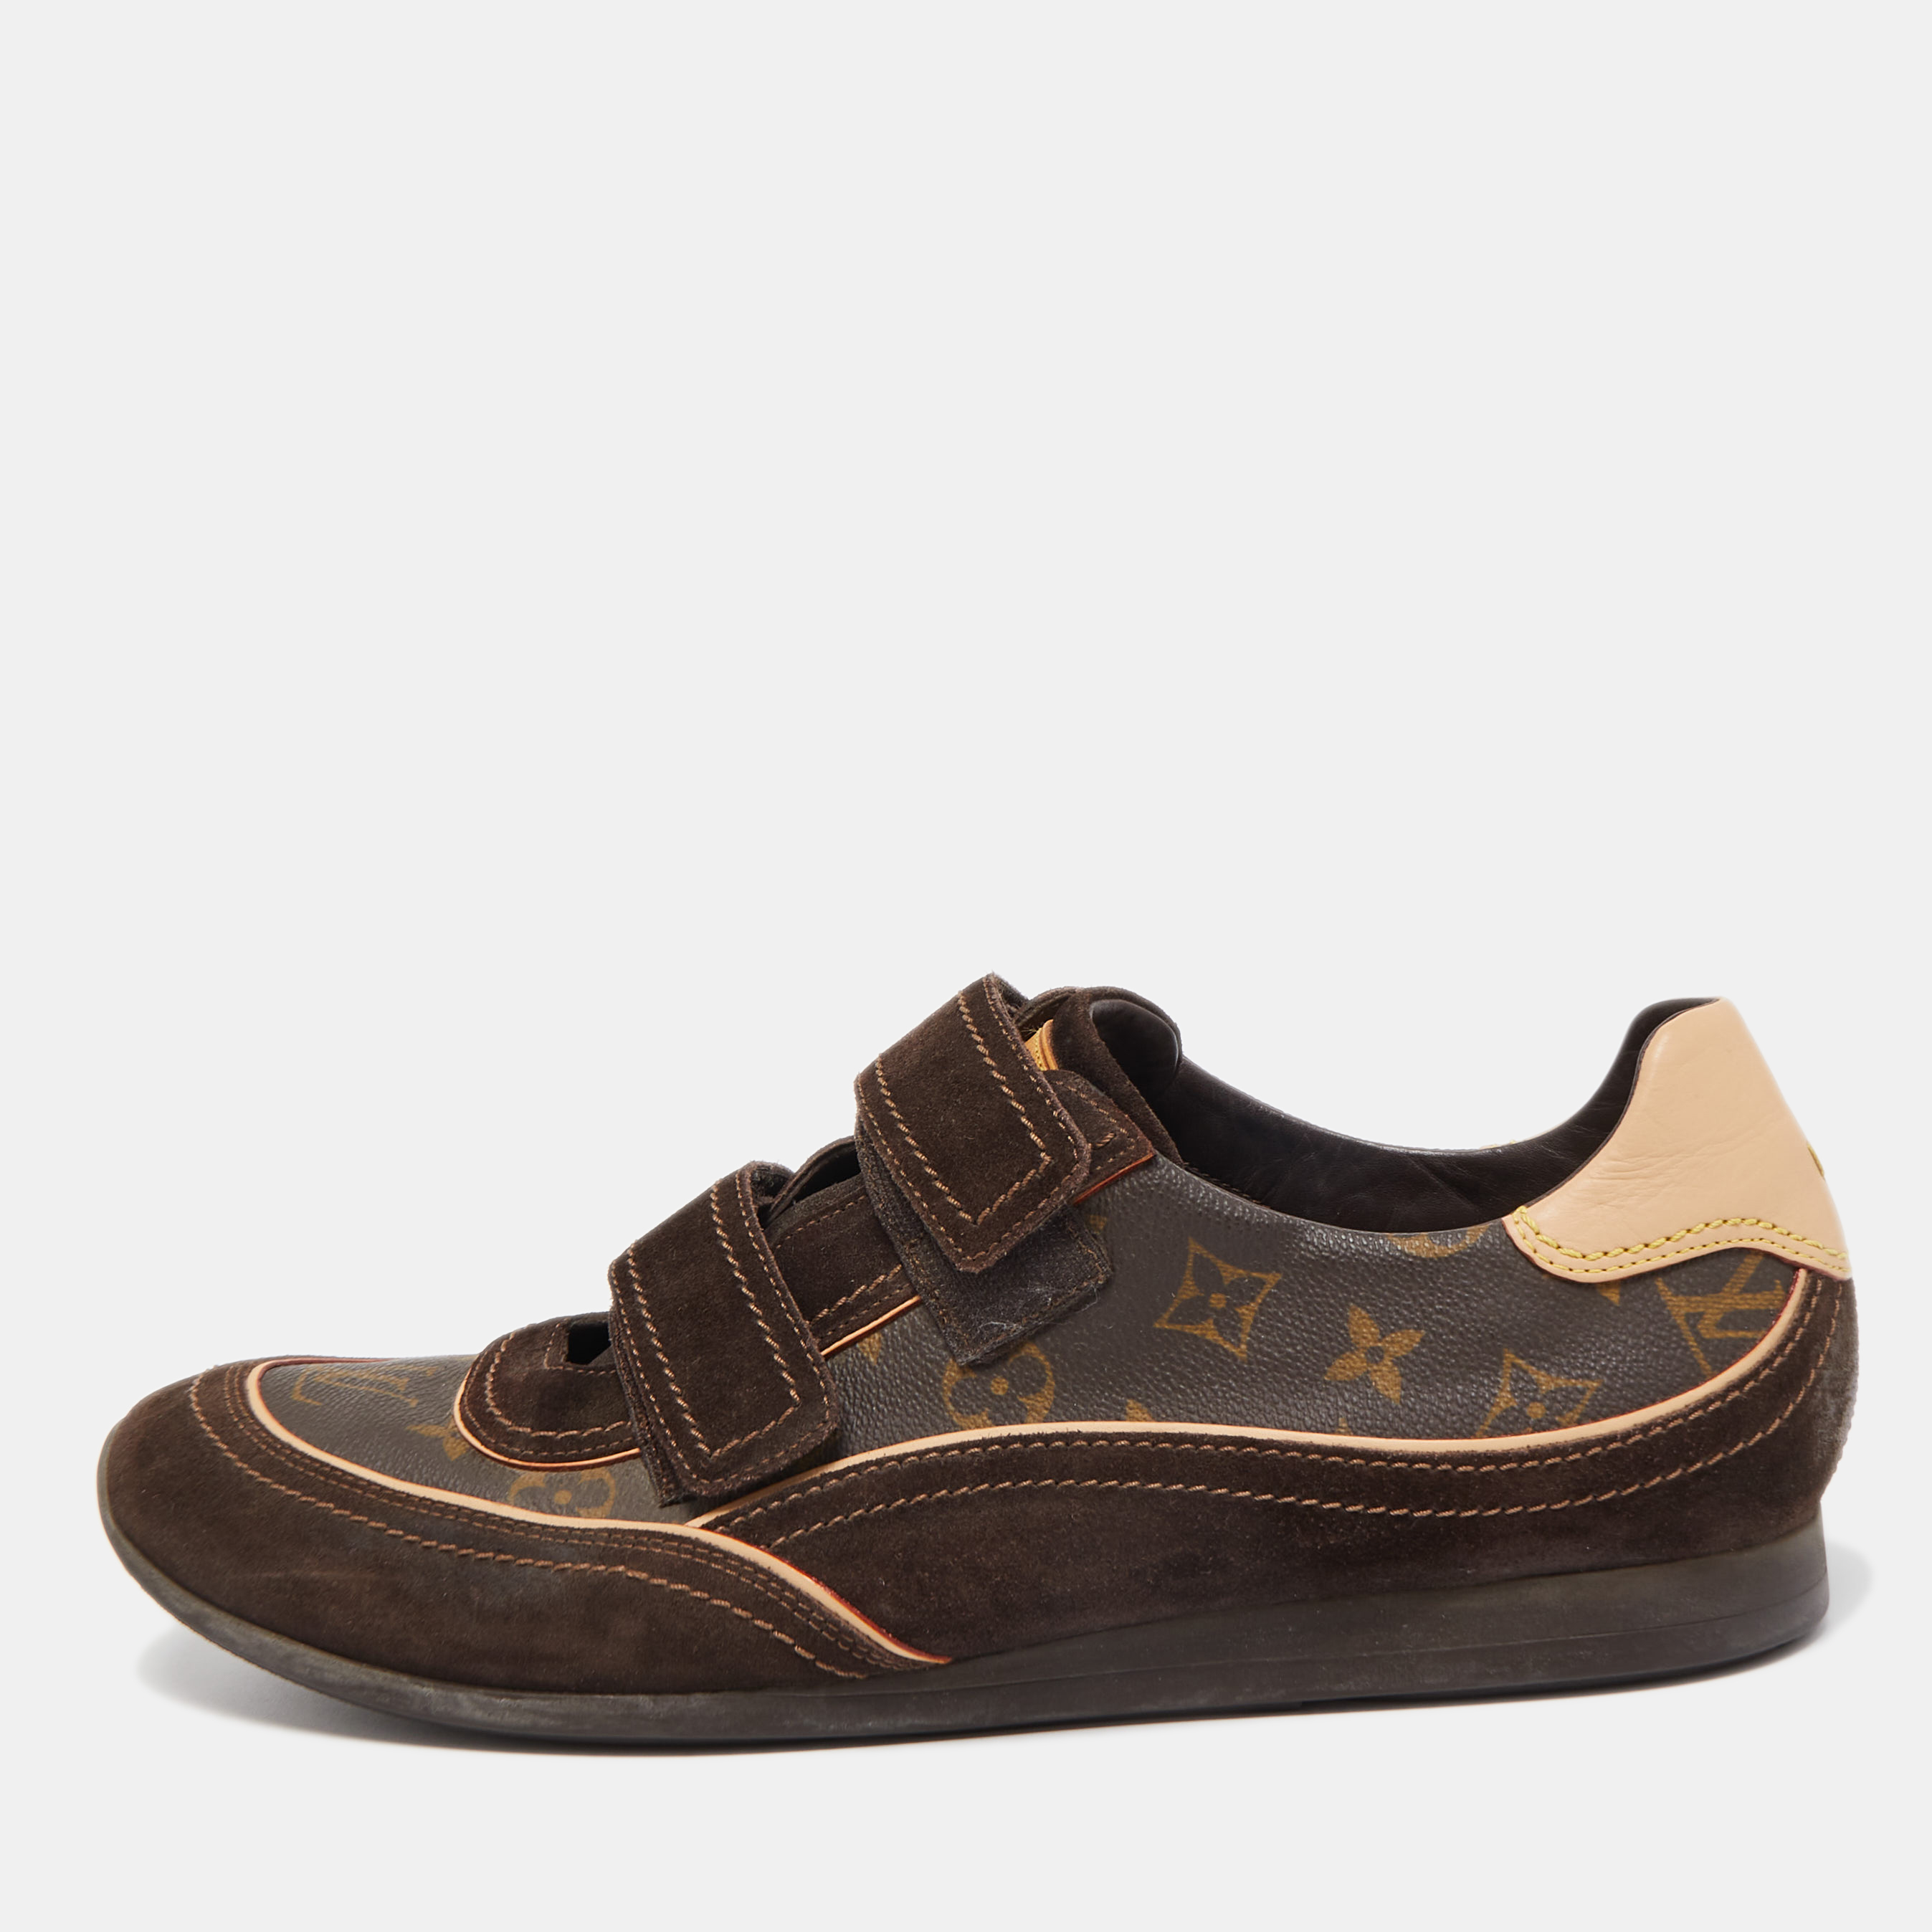 Buy Cheap Louis Vuitton Shoes for Men's Louis Vuitton Sneakers #9999924970  from